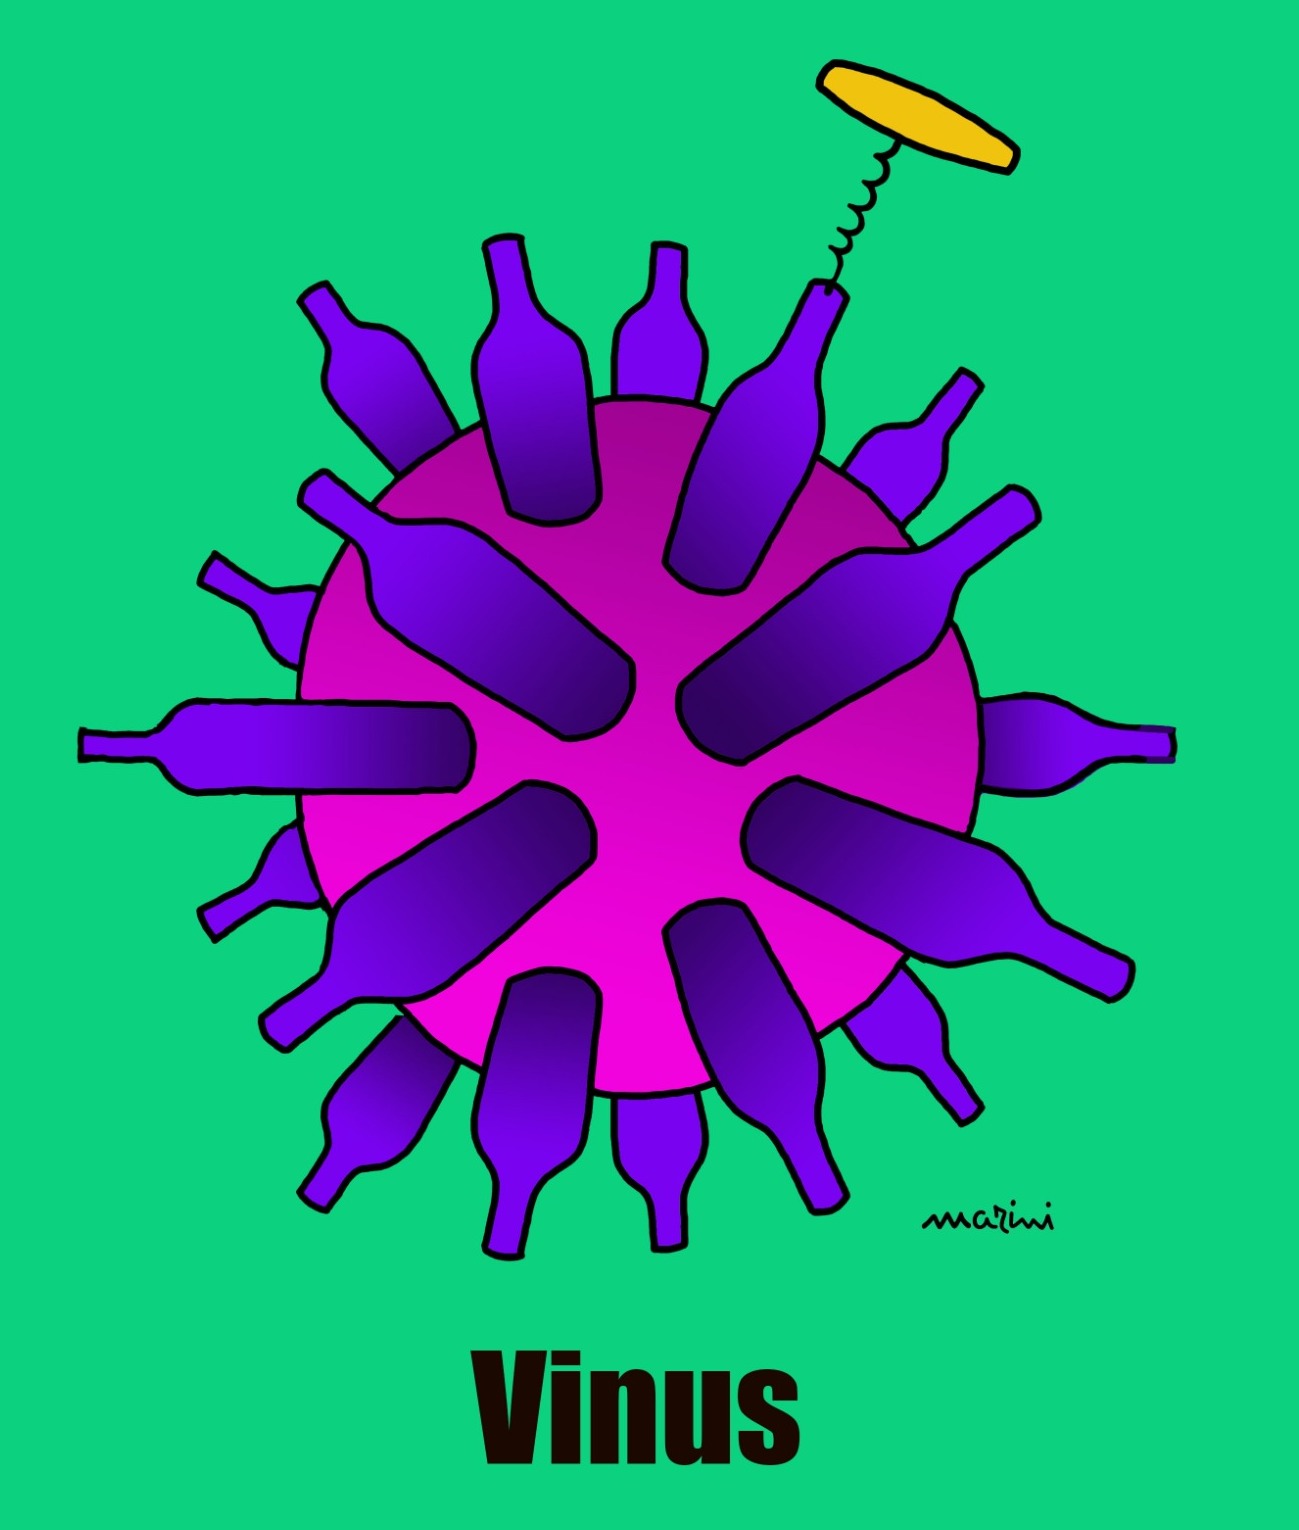 valerio marini covid coronavirus